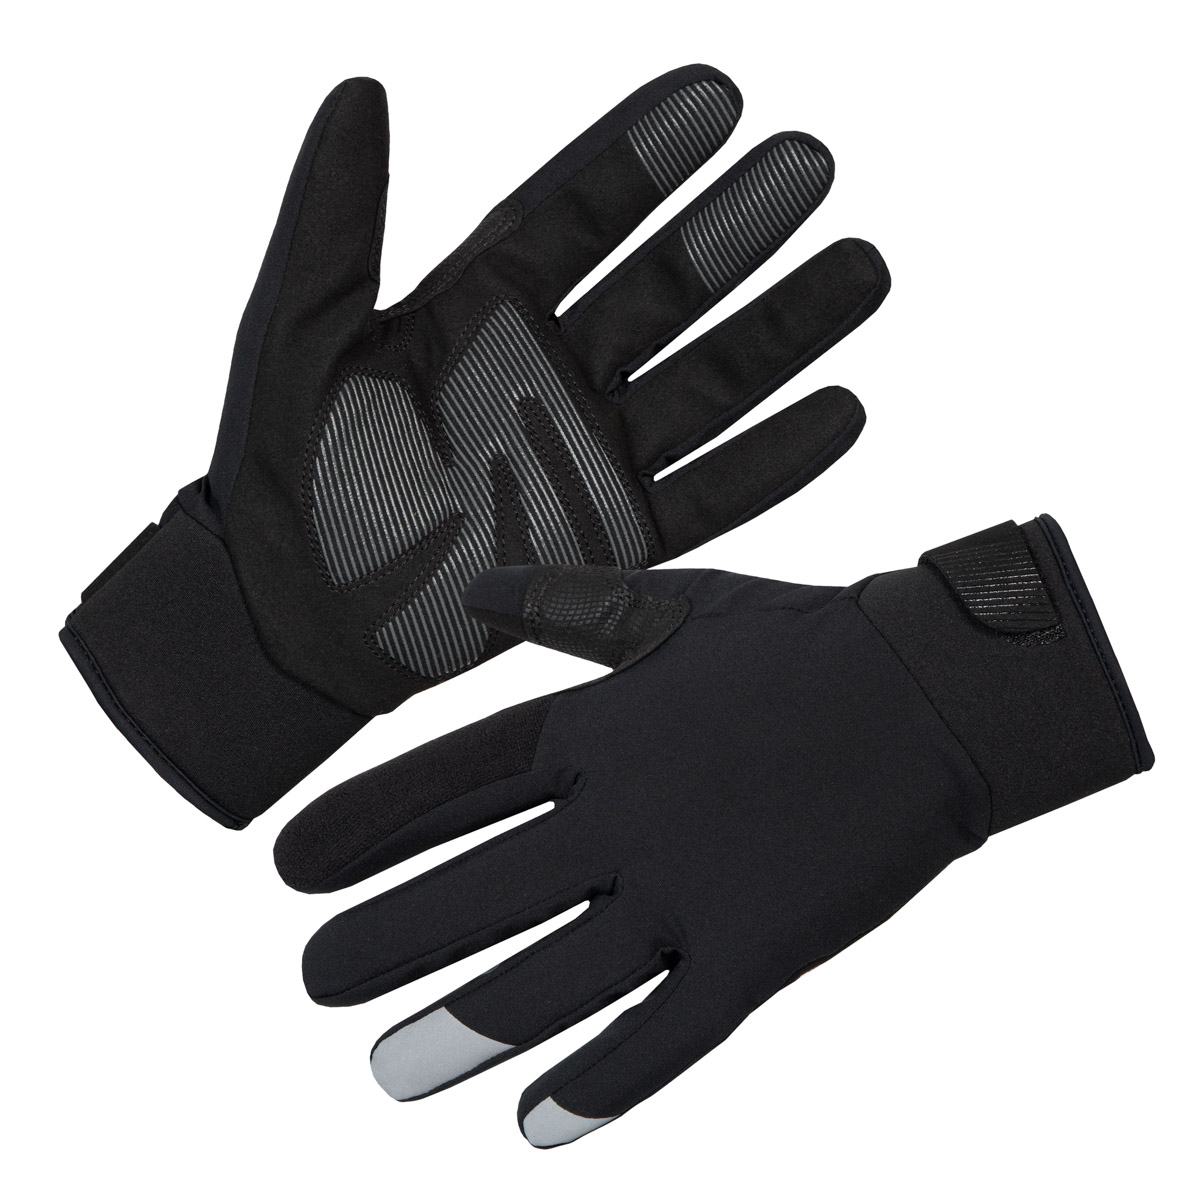 Waterproof glove - Endura Uniforms